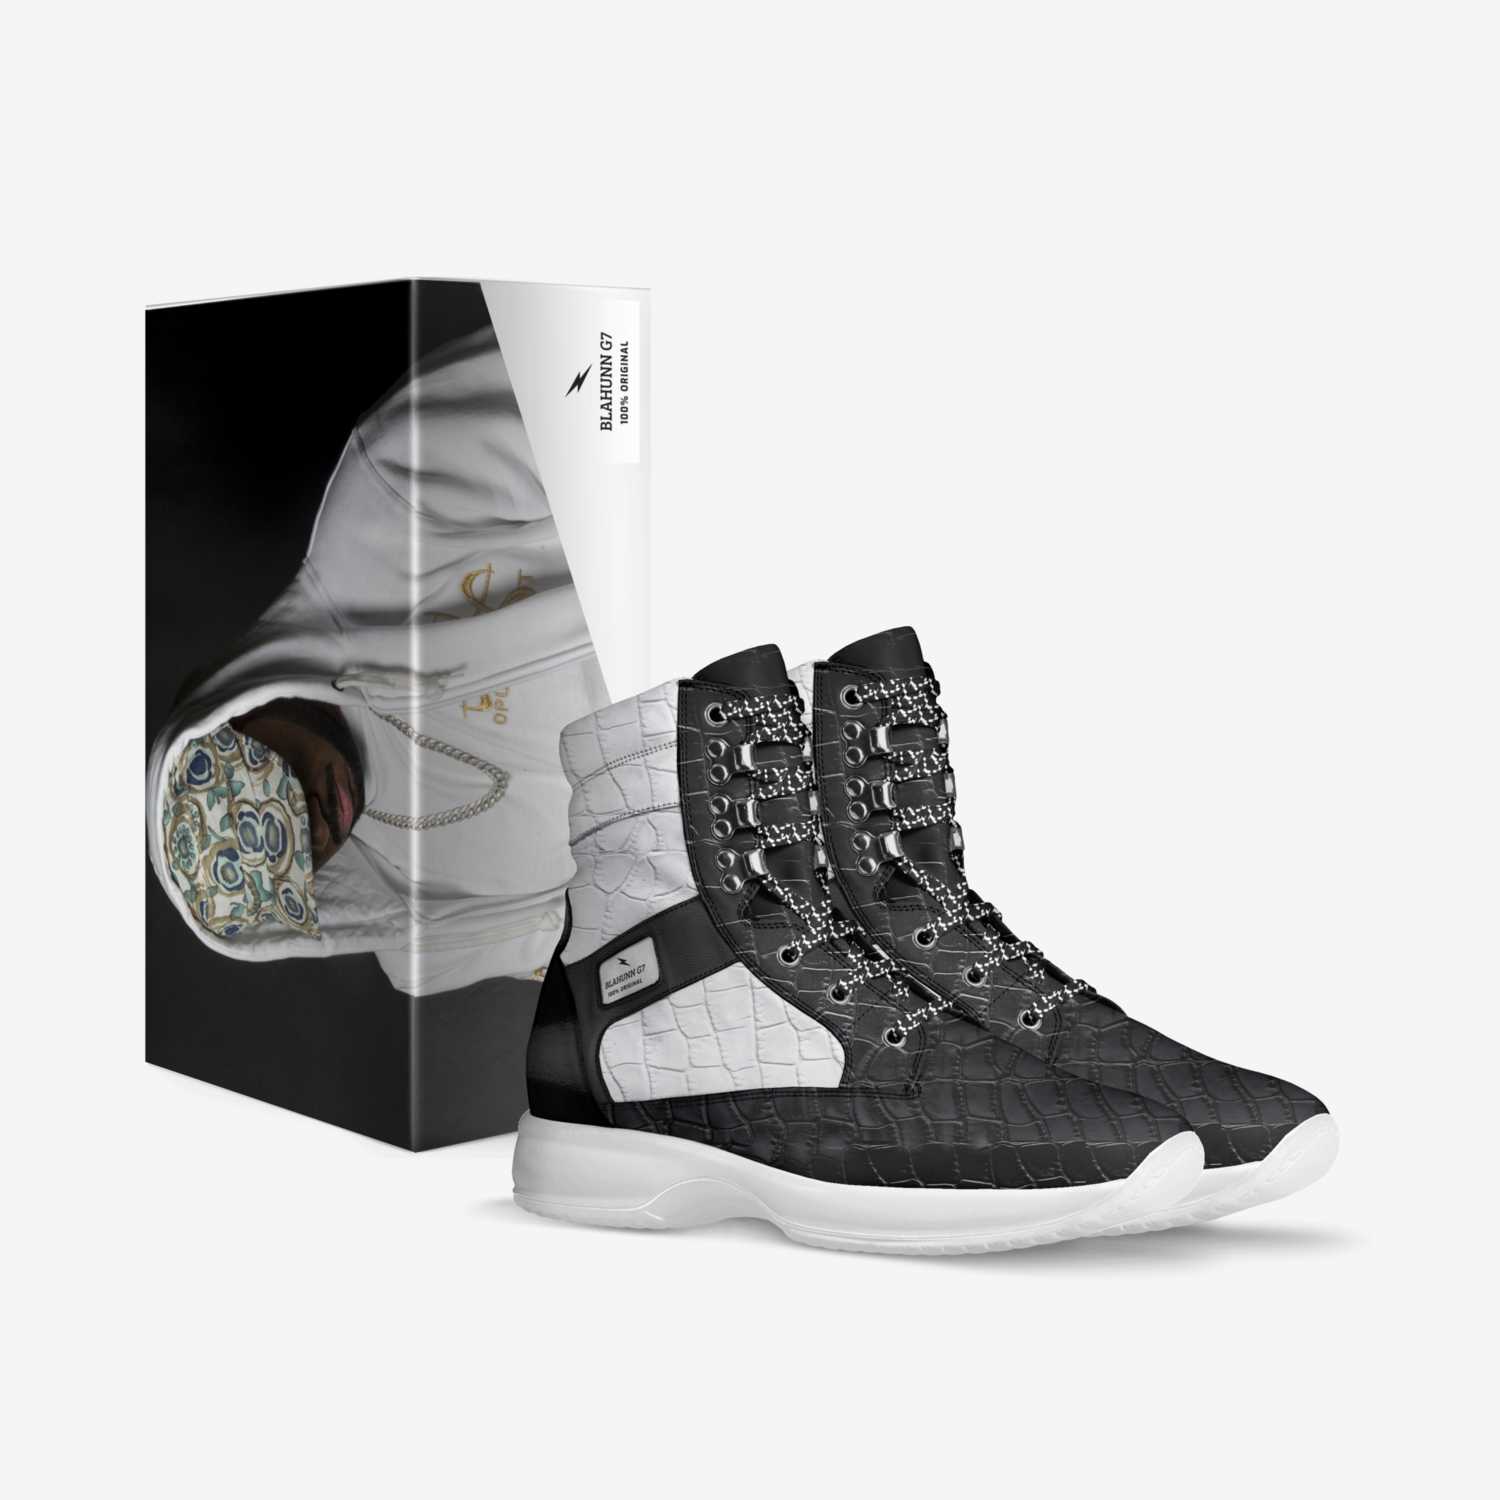 Onyazai Blahunn custom made in Italy shoes by Jahi Ali-bey | Box view